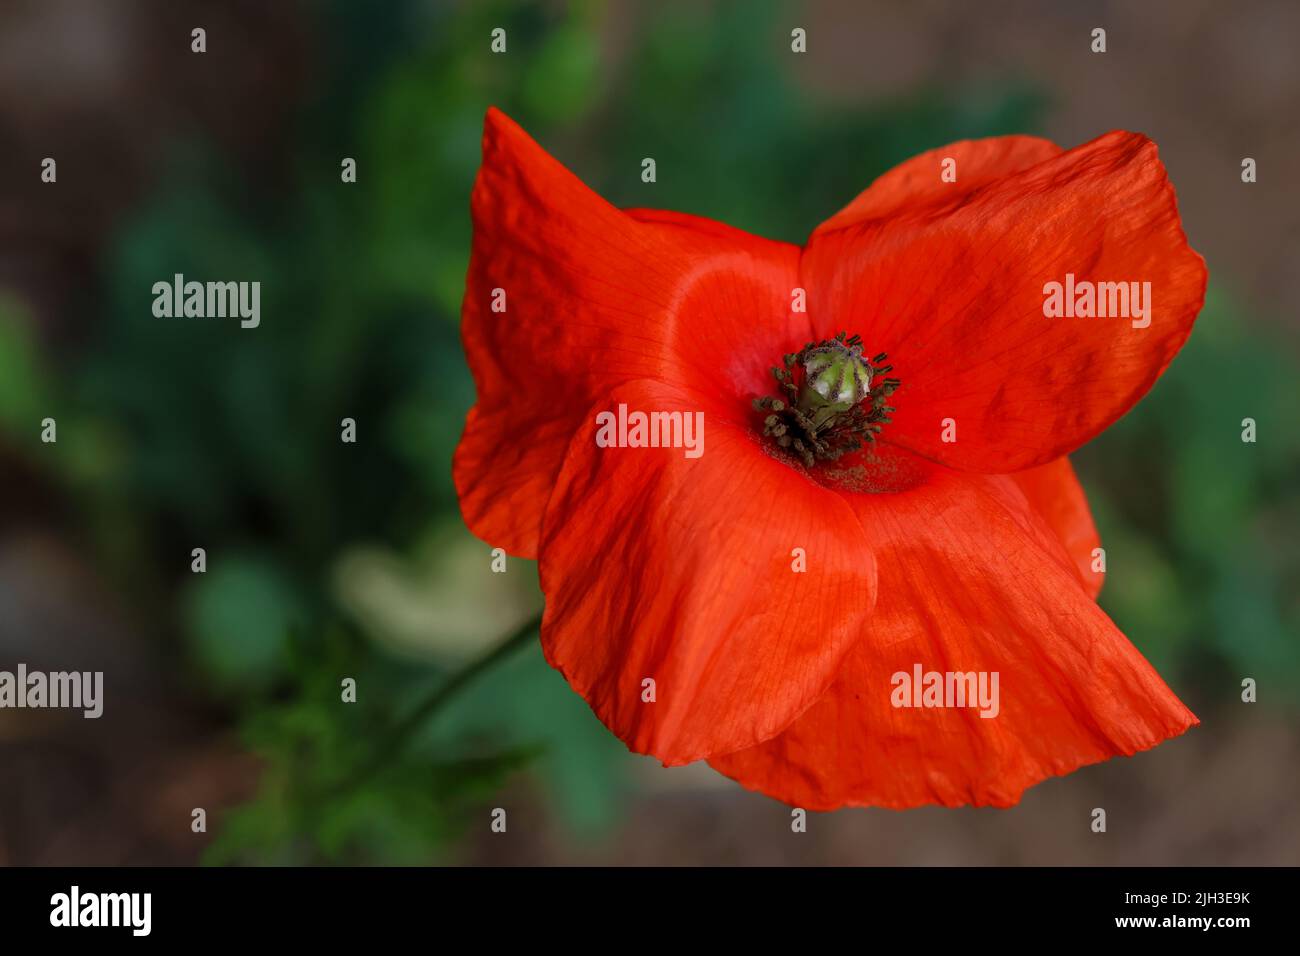 Red poppy flower against blurred background. Macro closeup petals and stigma. Ireland Stock Photo